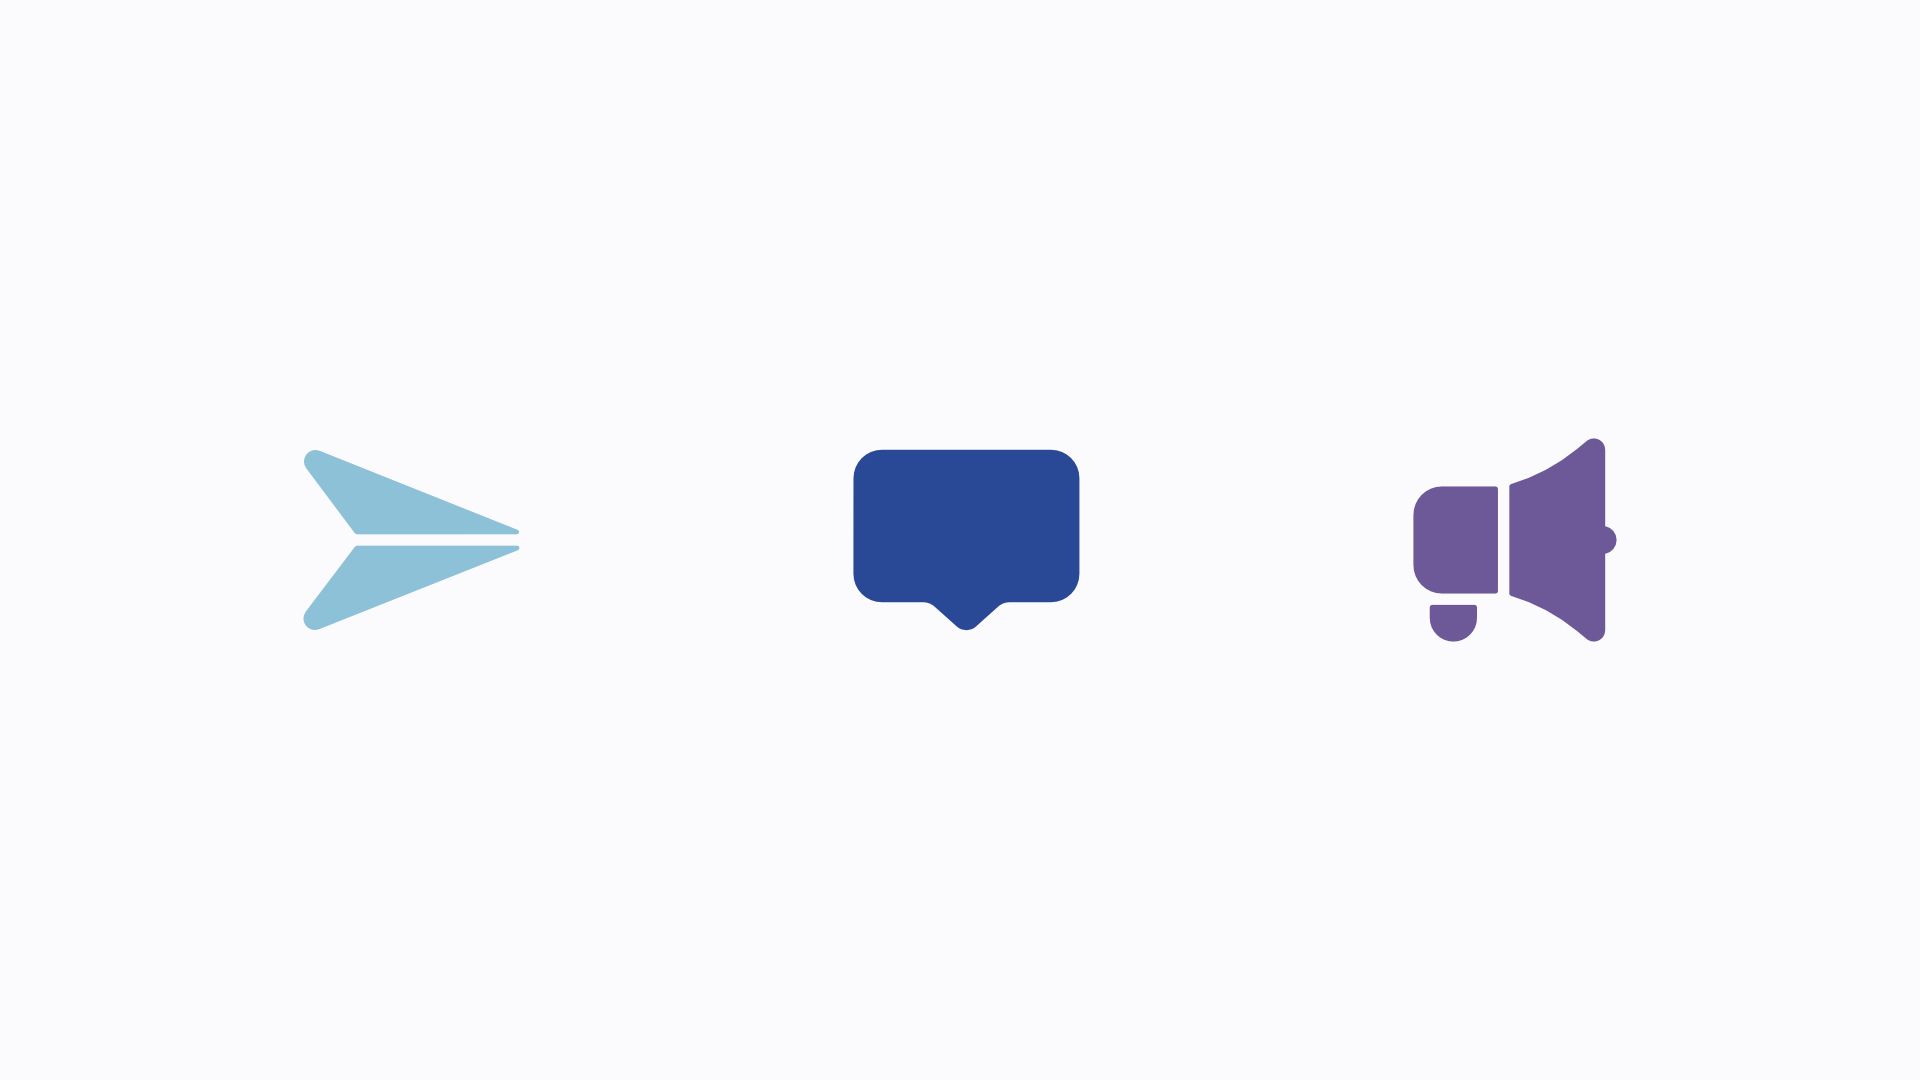 Communication icons, paper plane, chat, bullhorn